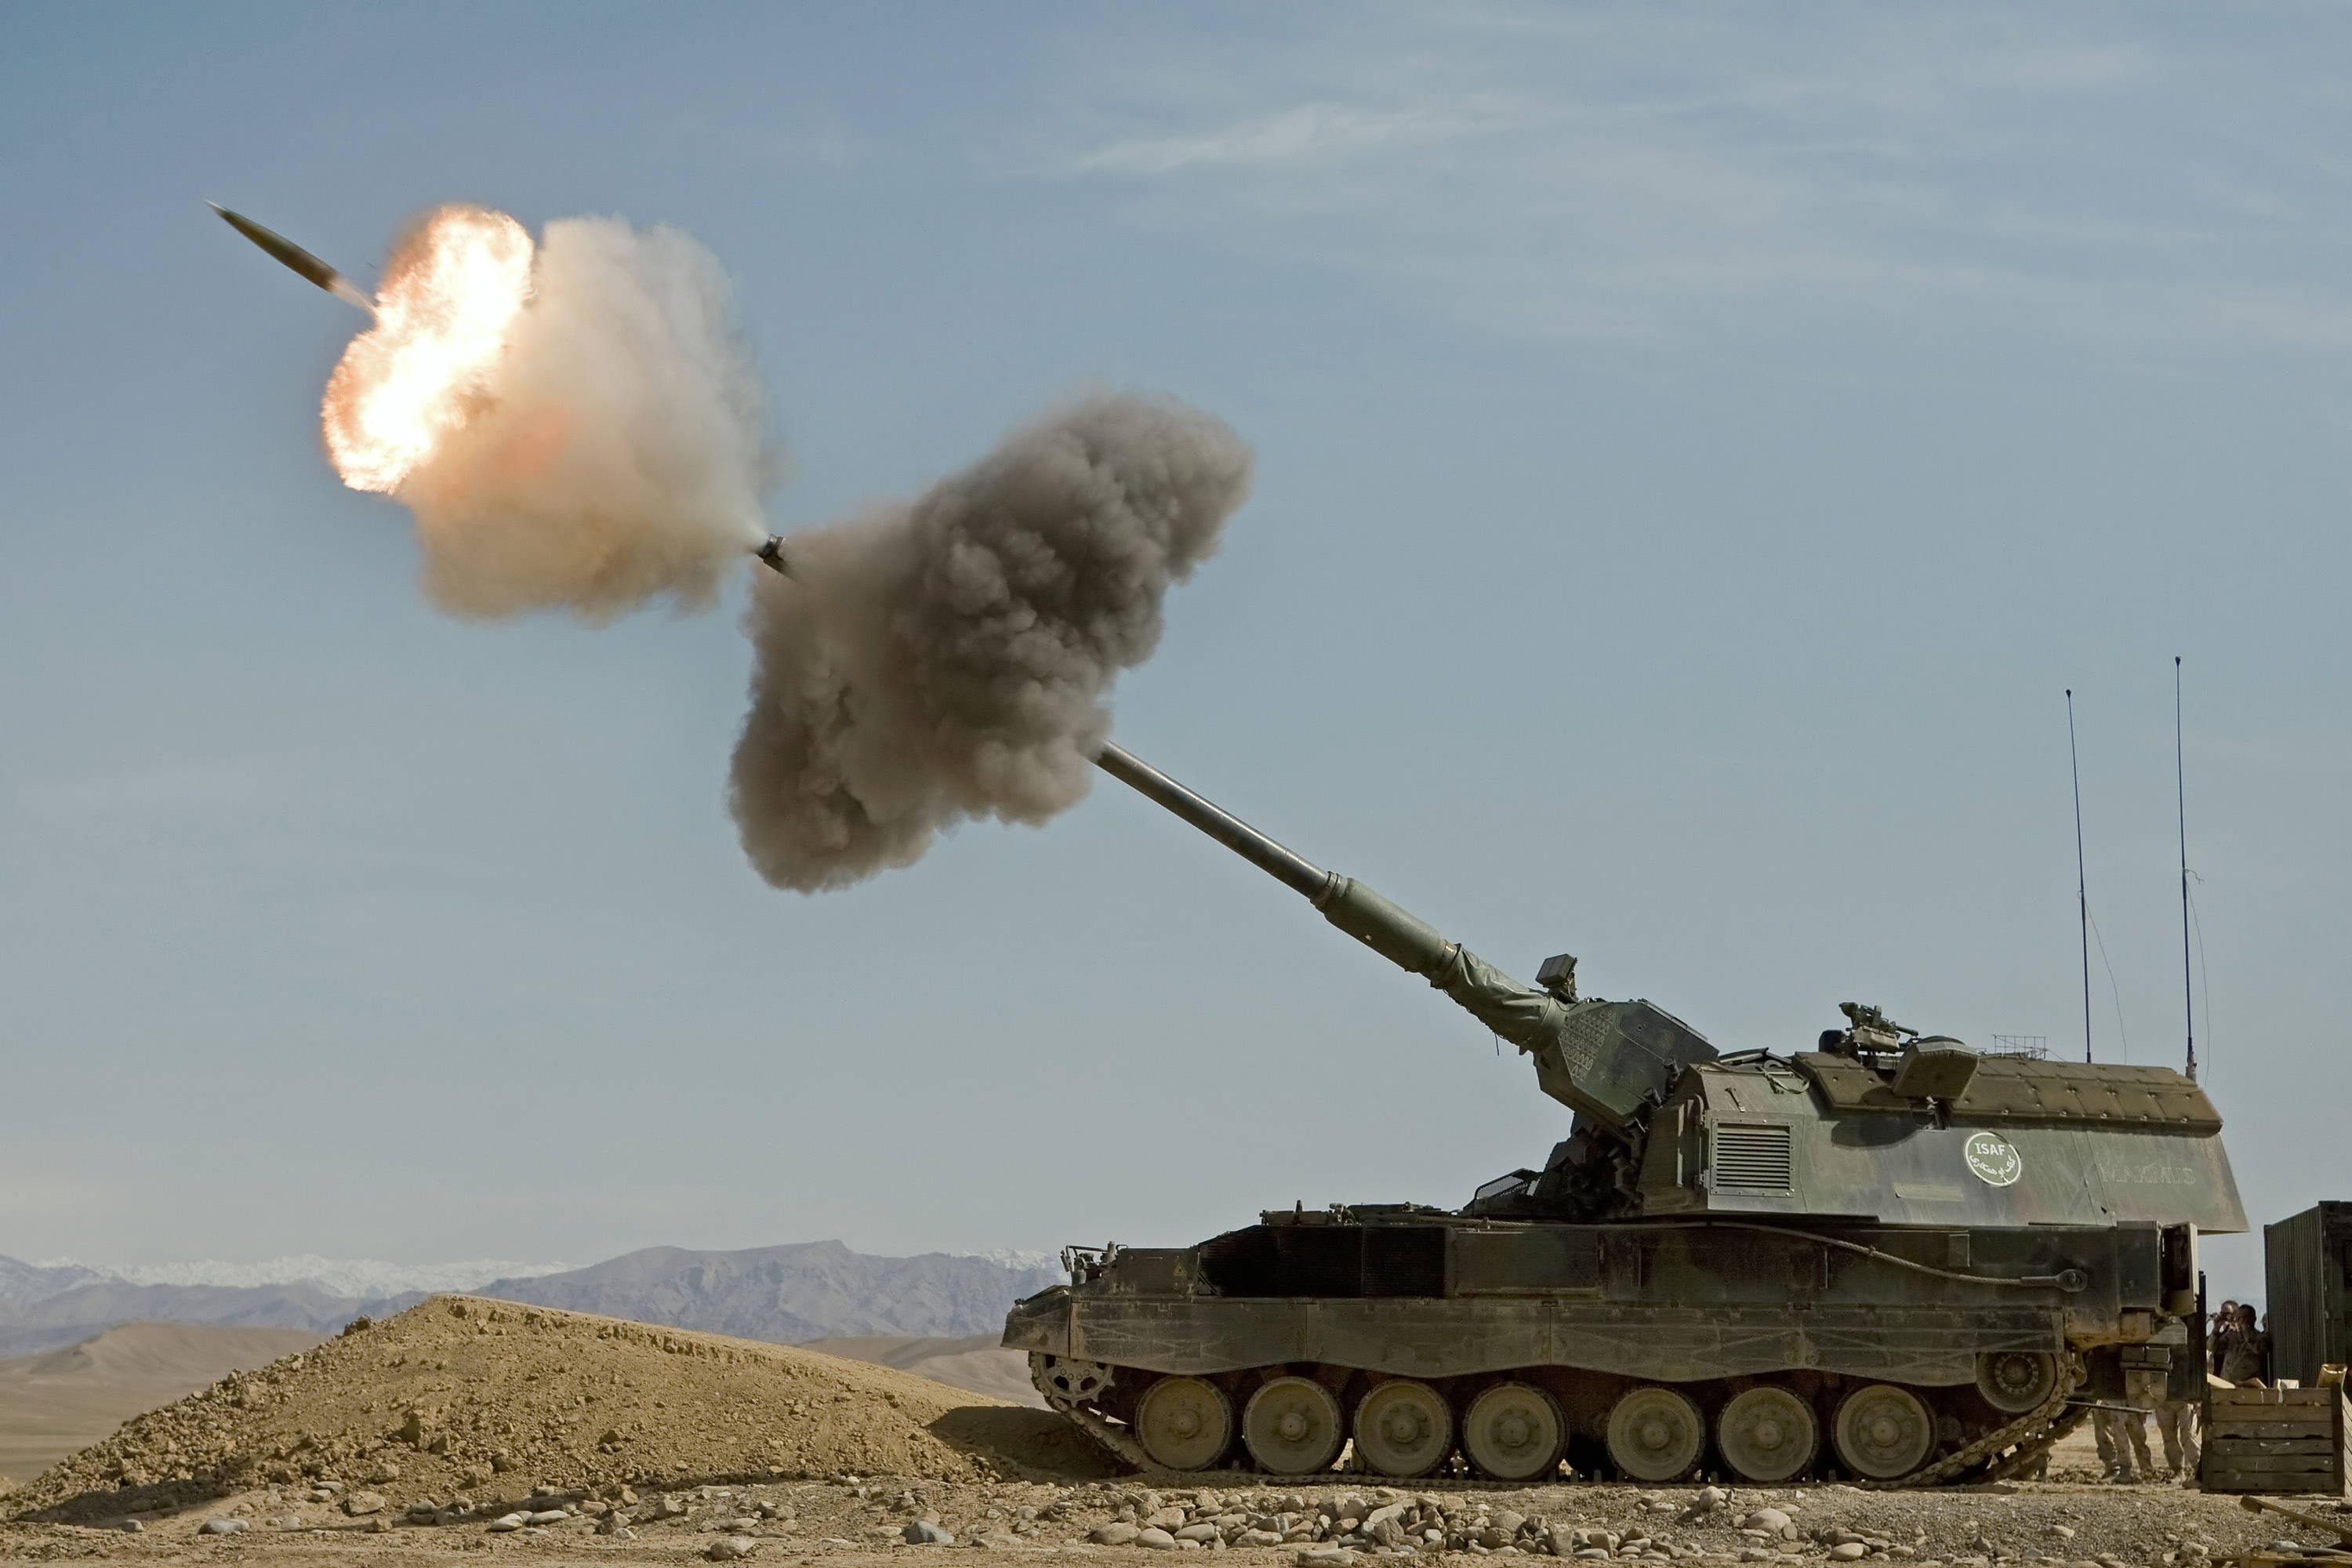 Dutch_Panzerhaubitz_fires_in_Afghanistan.jpg